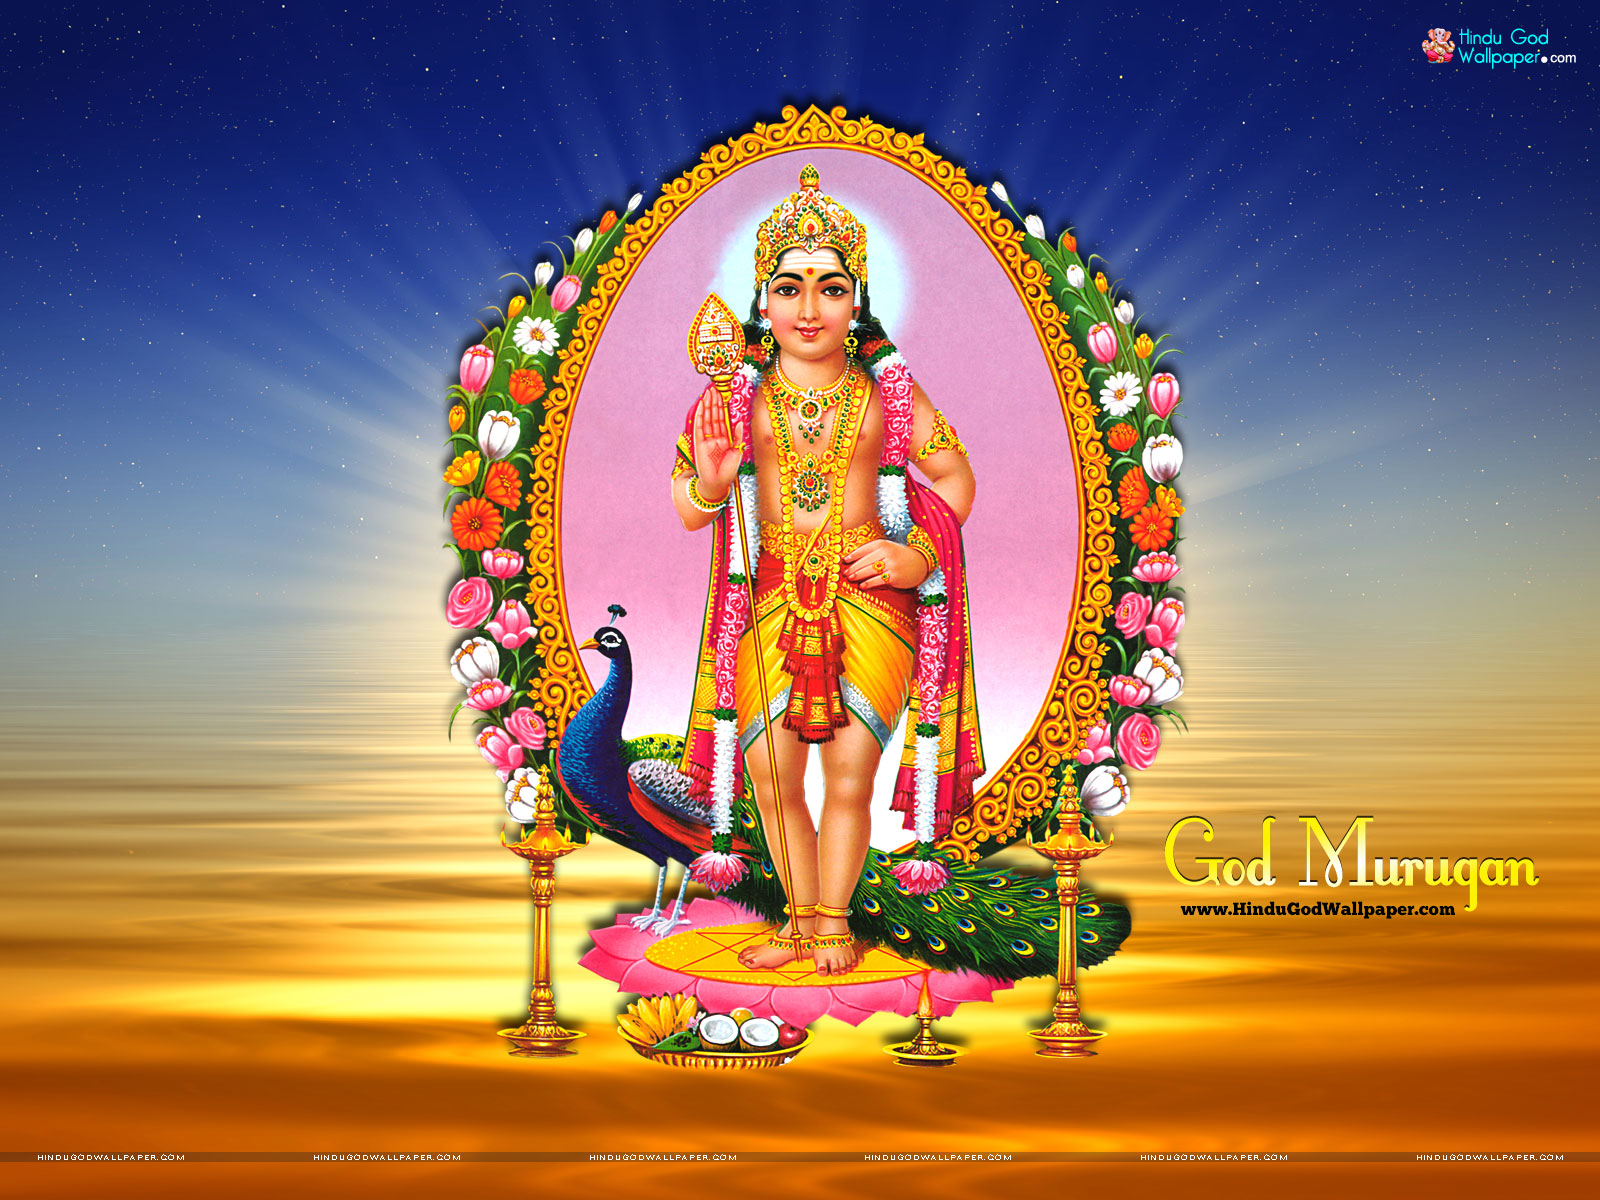 Tamil God Murugan Wallpapers, Images & Photos Download